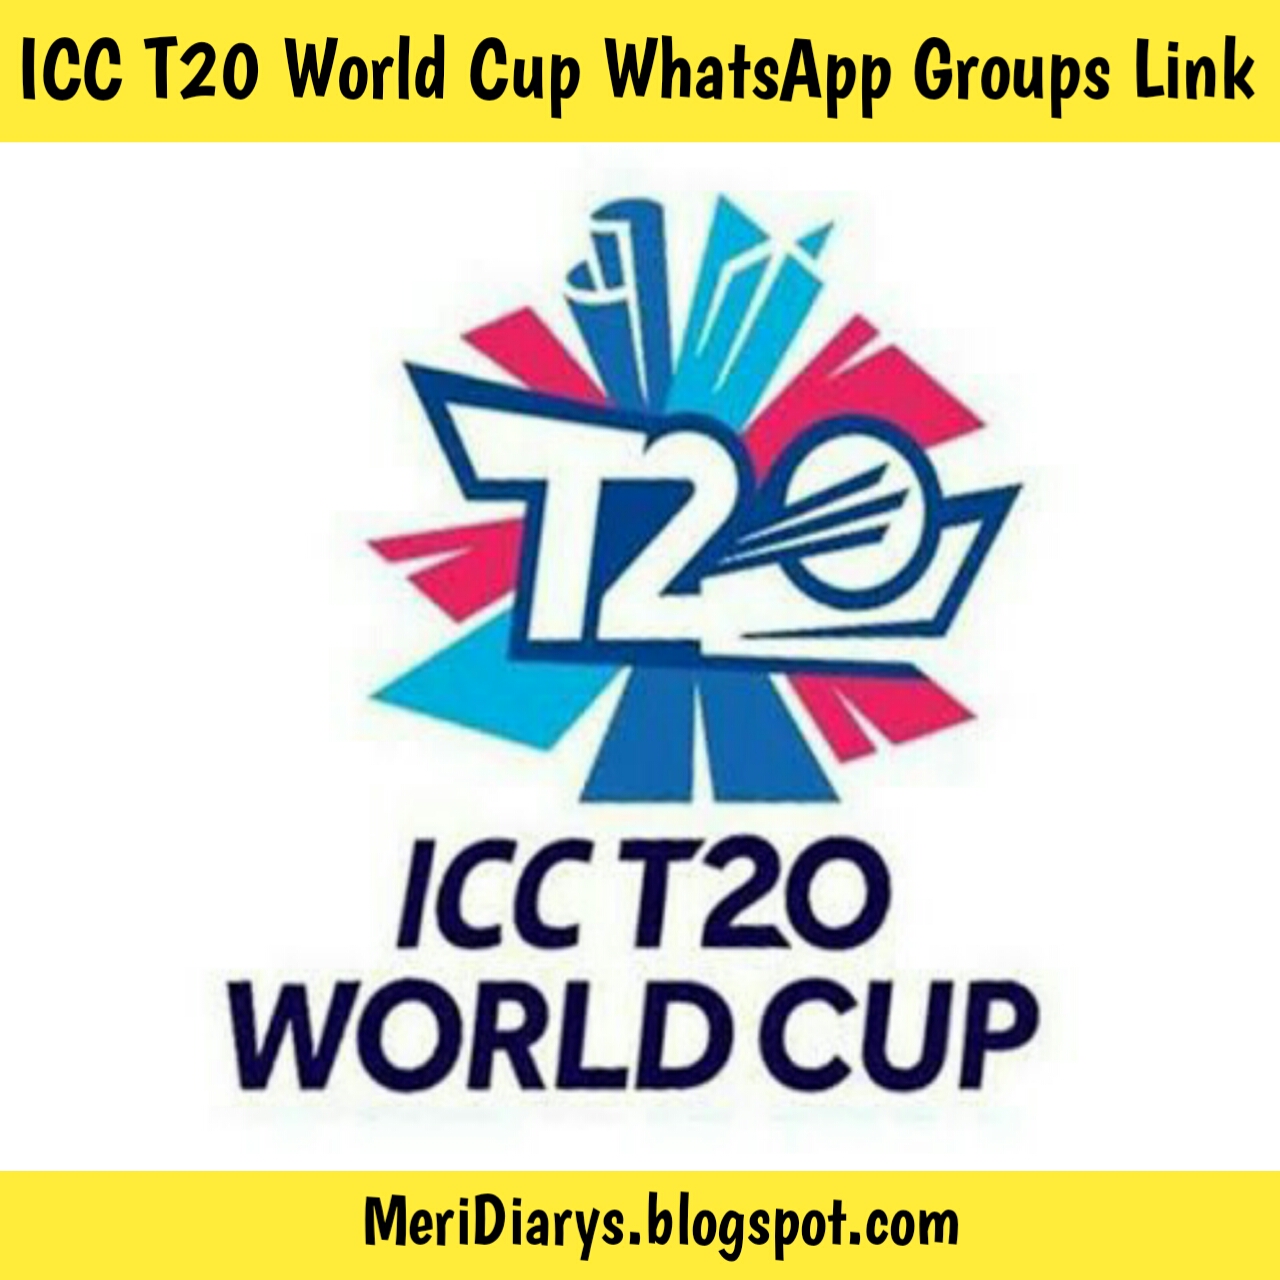 ICC T20 Cricket World Cup 2021 WhatsApp Groups Links | ICC T20 क्रिकेट विश्व कप 2021 व्हाट्सएप ग्रुप लिंक